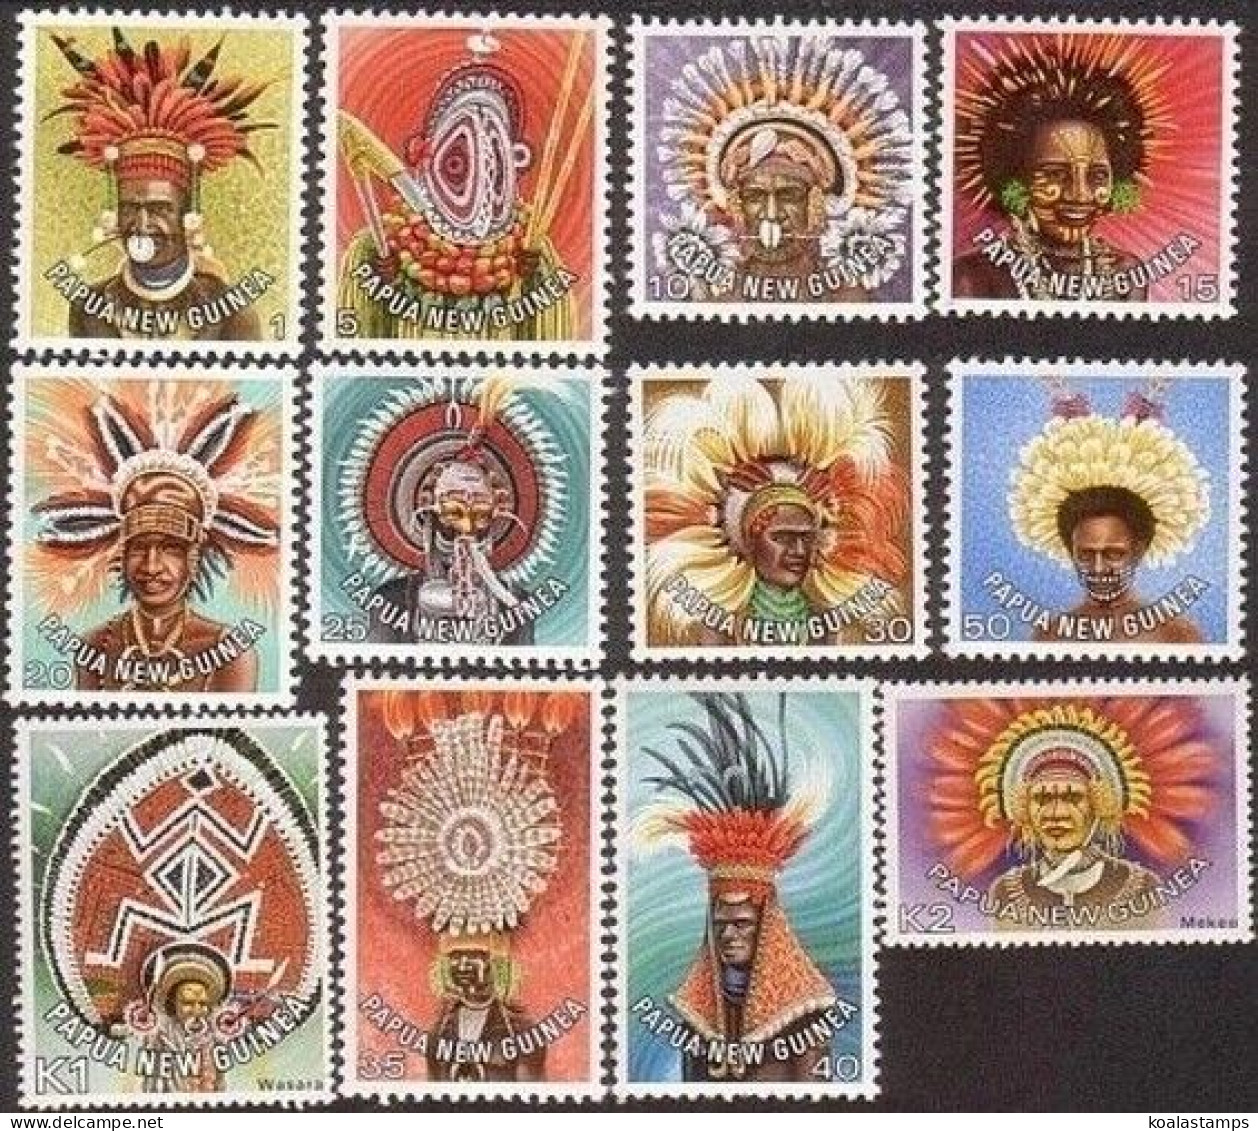 Papua New Guinea 1977 SG318-329 Headdress Series MNH - Papua New Guinea